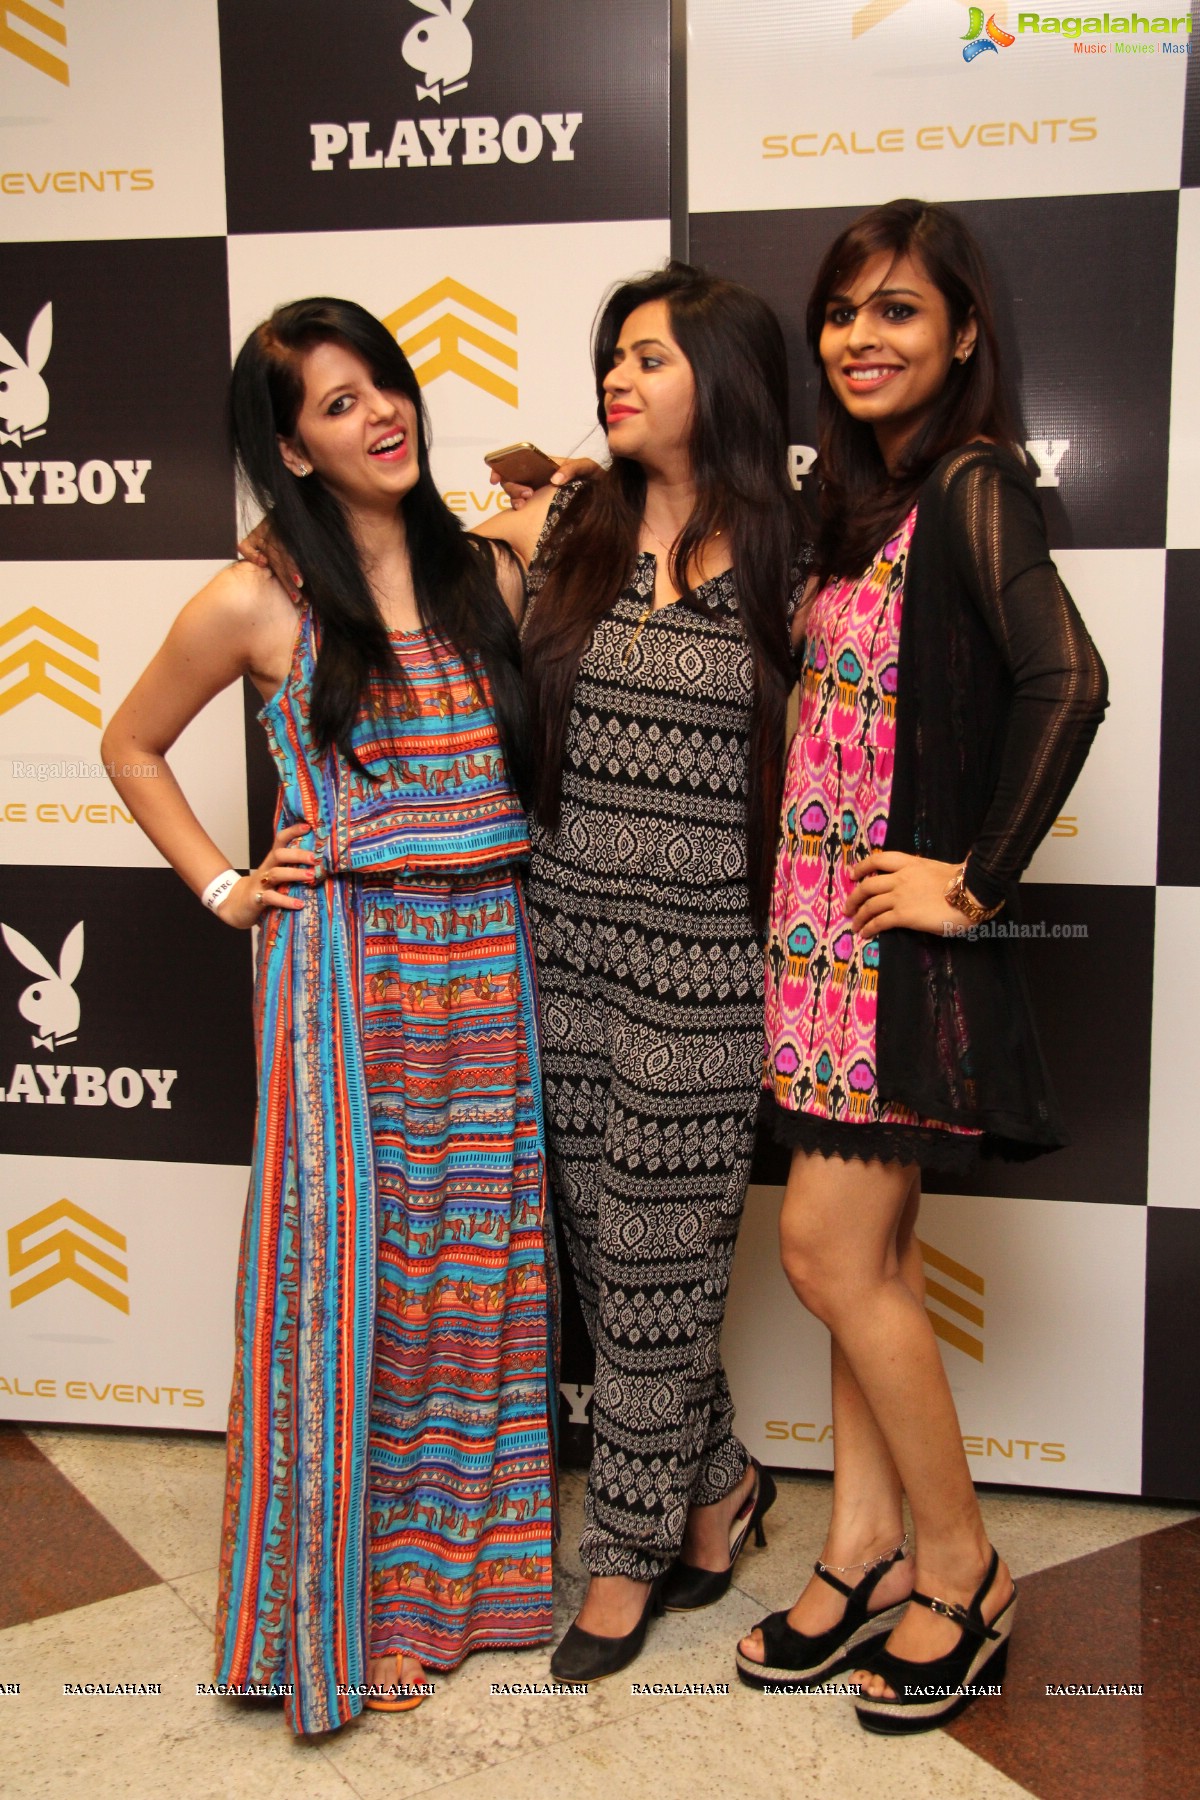 Playboy Club Hyderabad - December 12, 2015